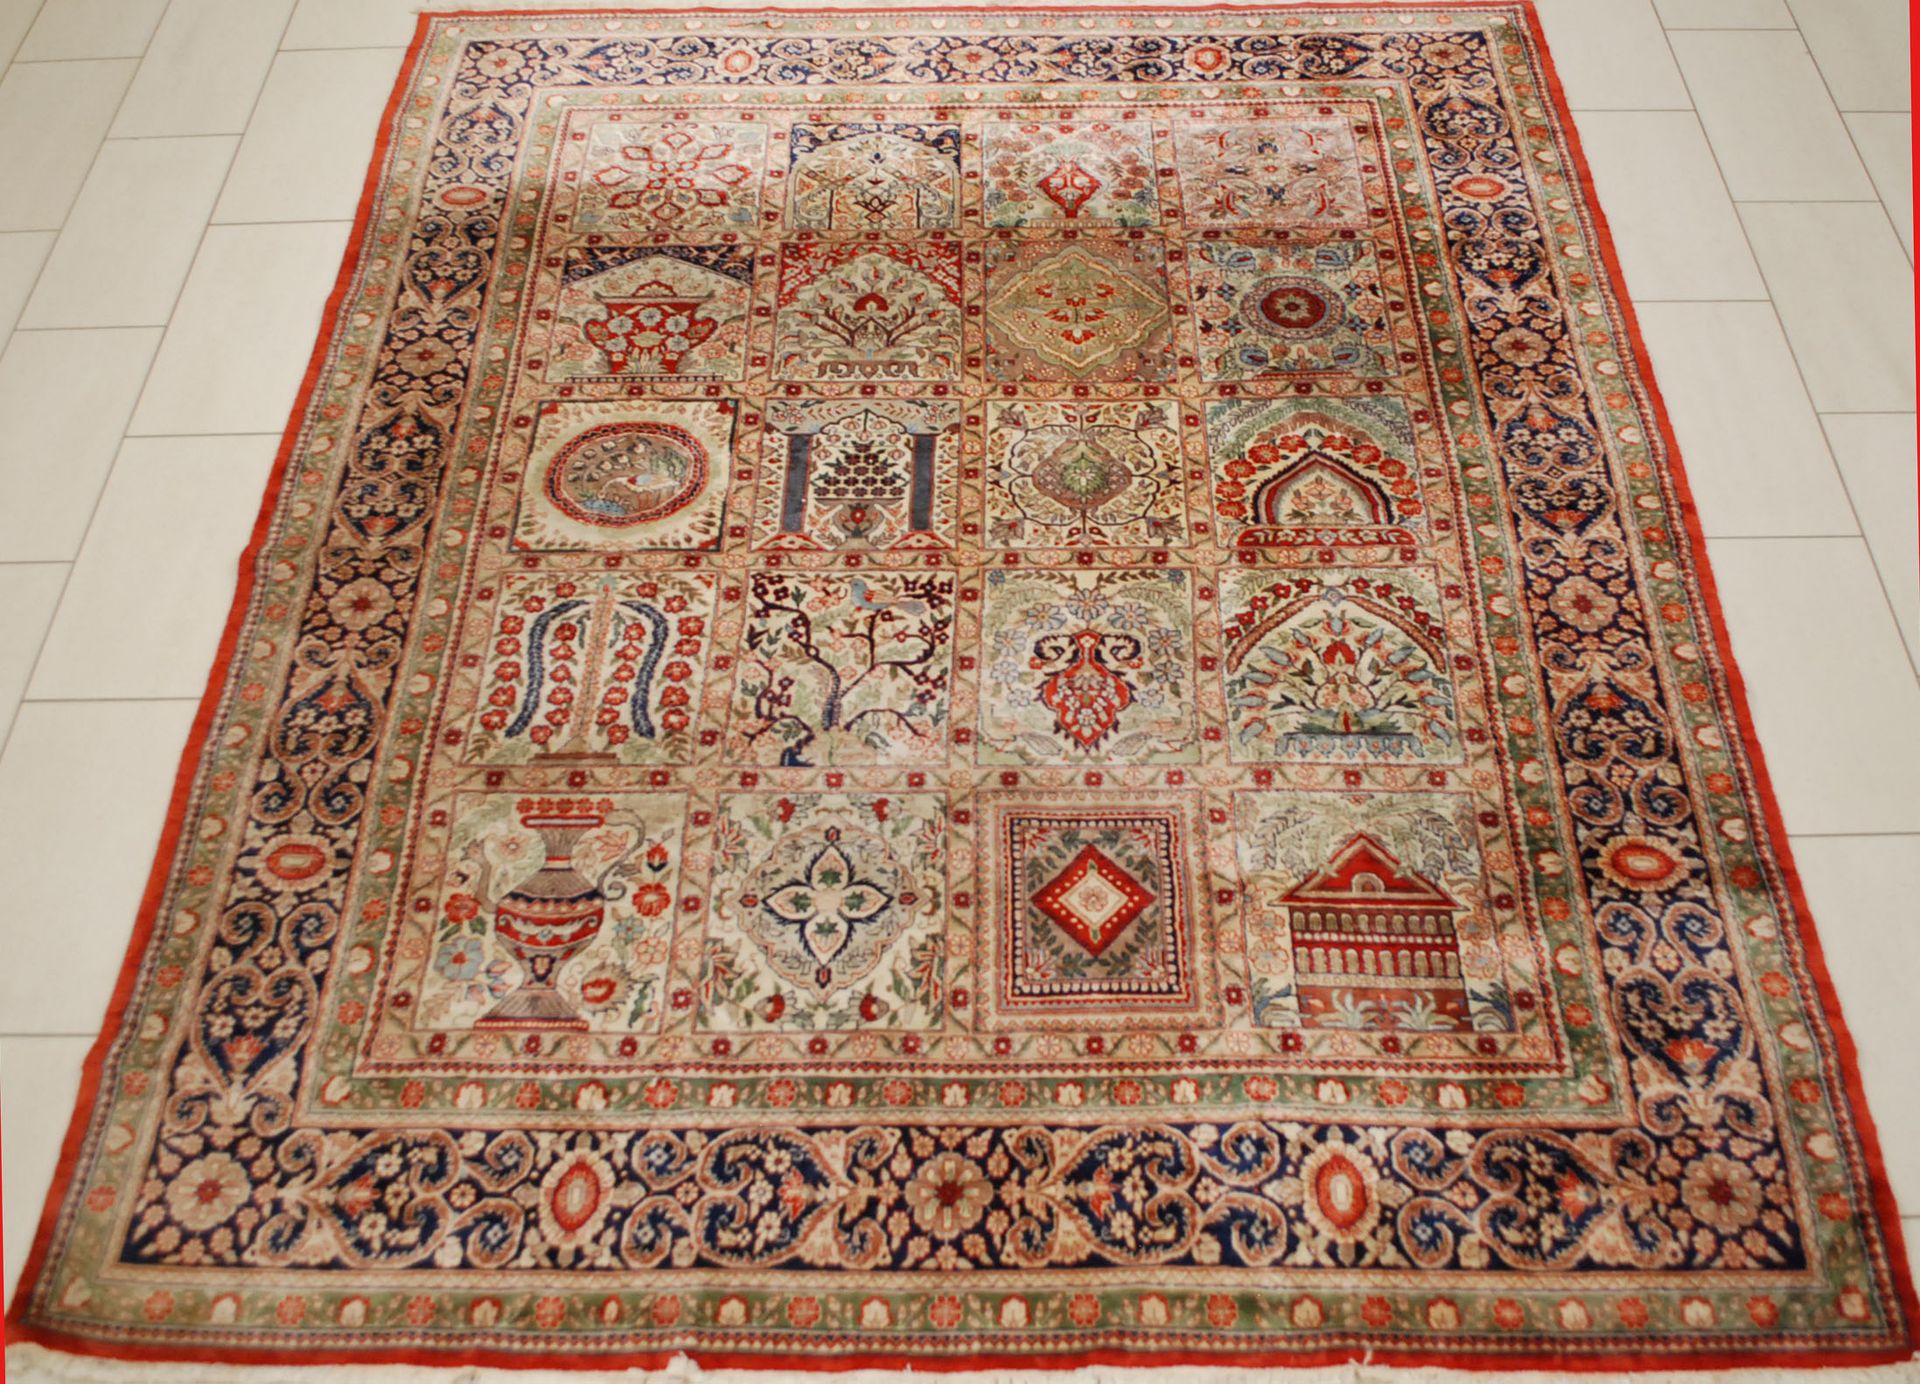 Travail iranien. Goum地毯，100%真丝。

尺寸：296 x 244 cm。